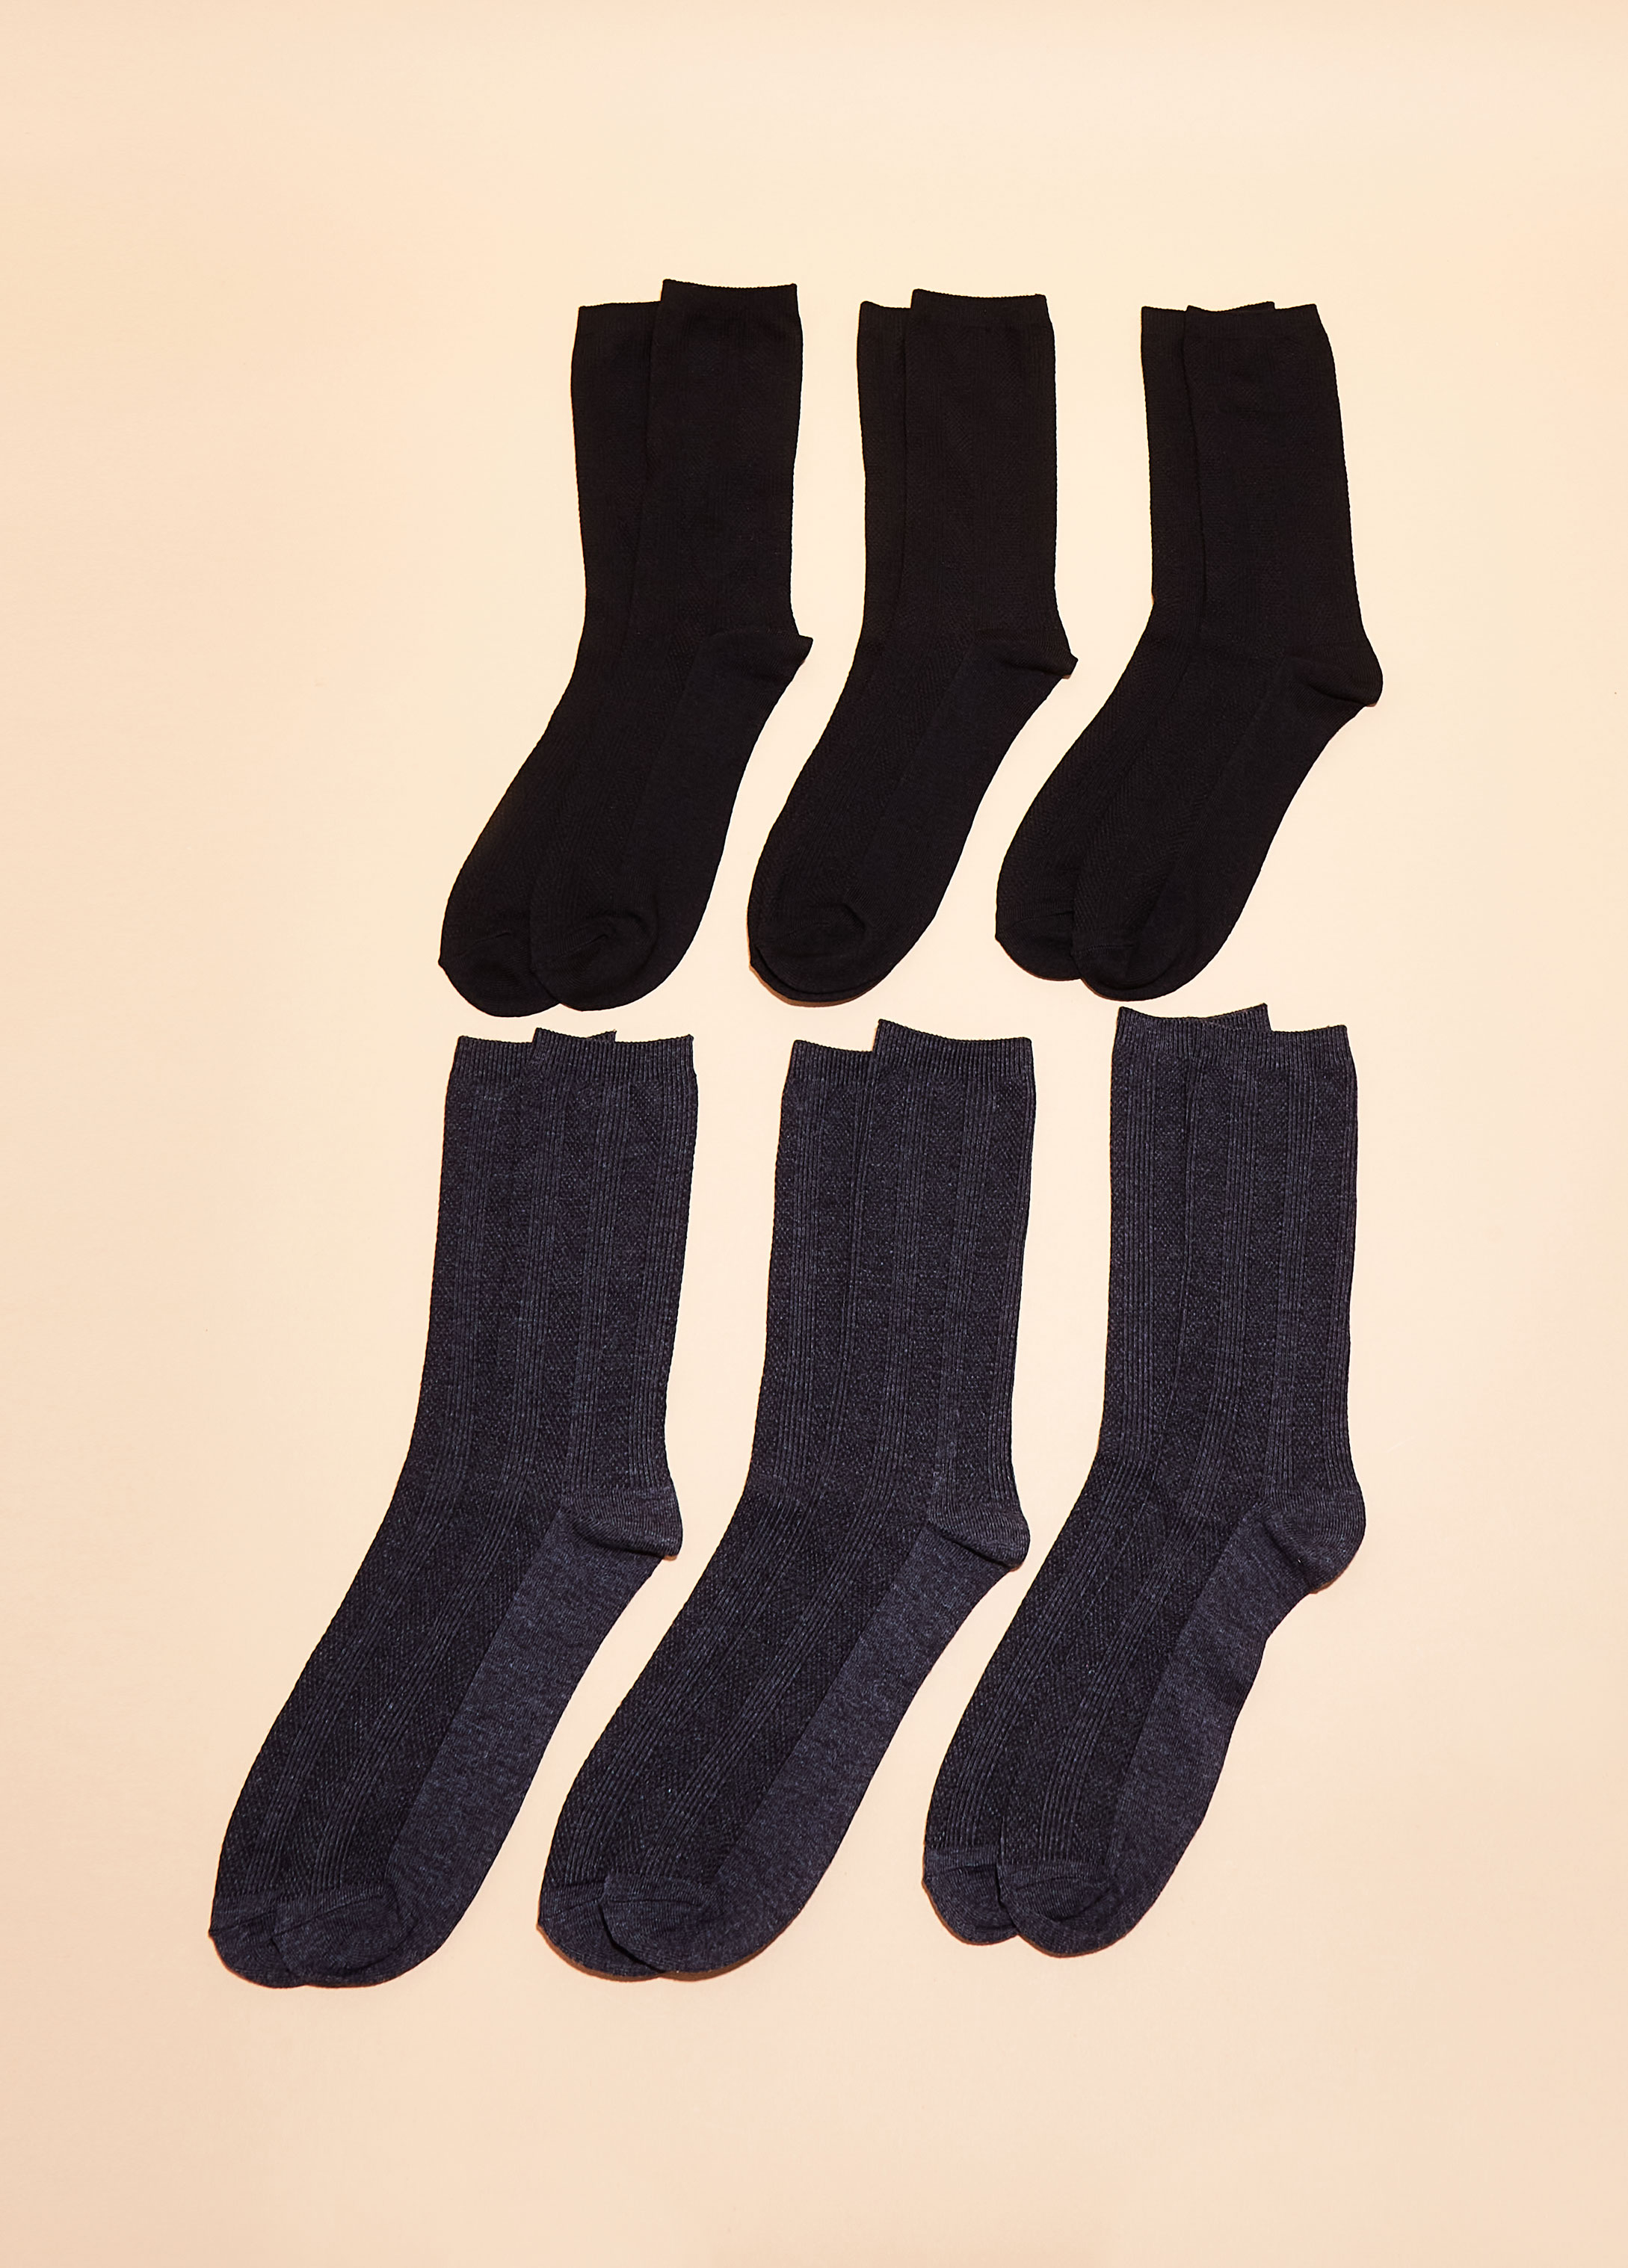 Plus Size 6PK Textured Crew Socks, BLACK, 1SZ - Ashley Stewart